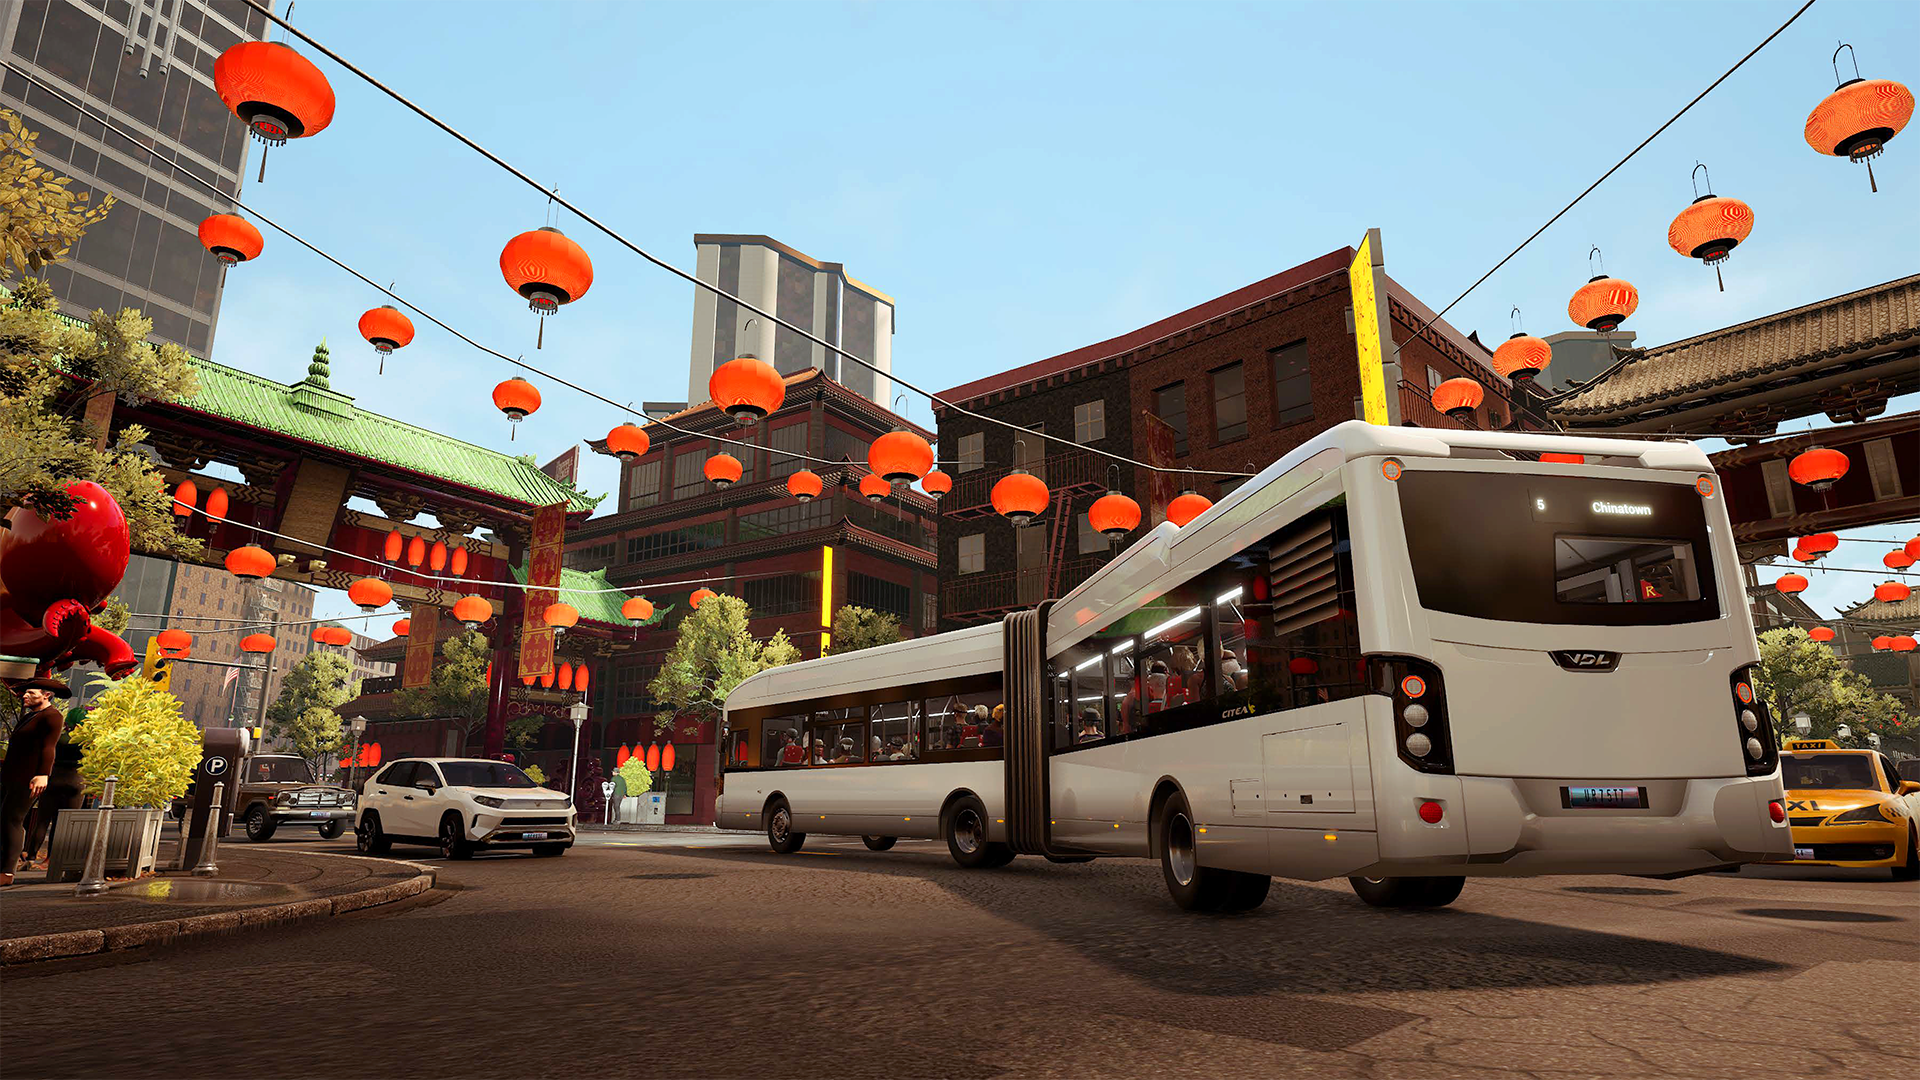 Bus Simulator 21 – VDL Bus Pack